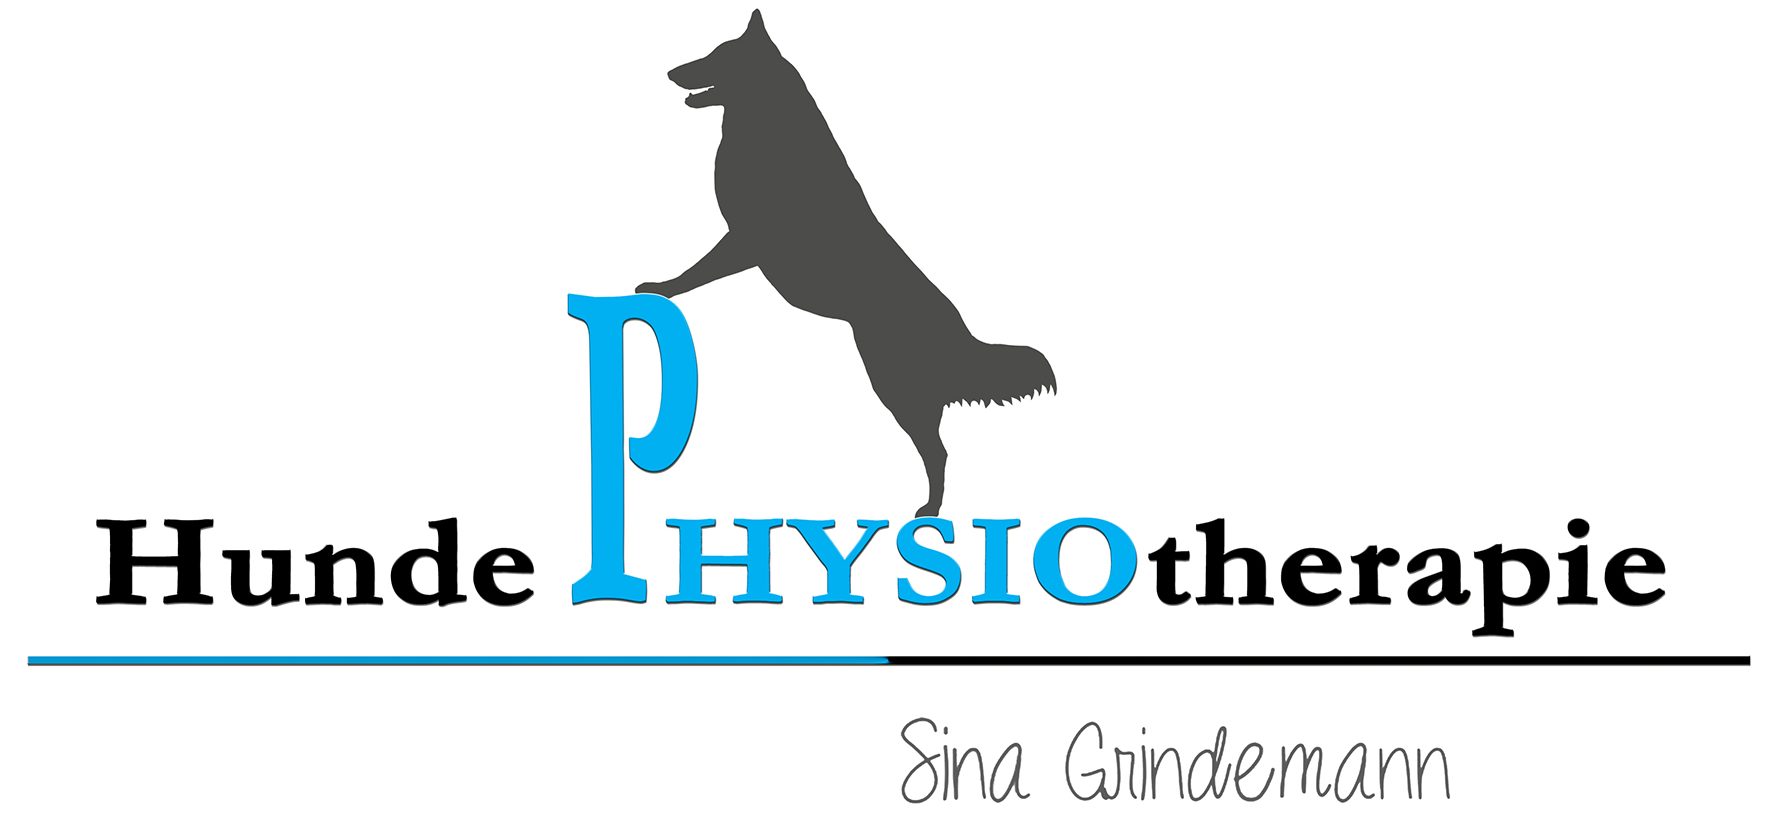 Hundephysiotherapie – Sina Grindemann